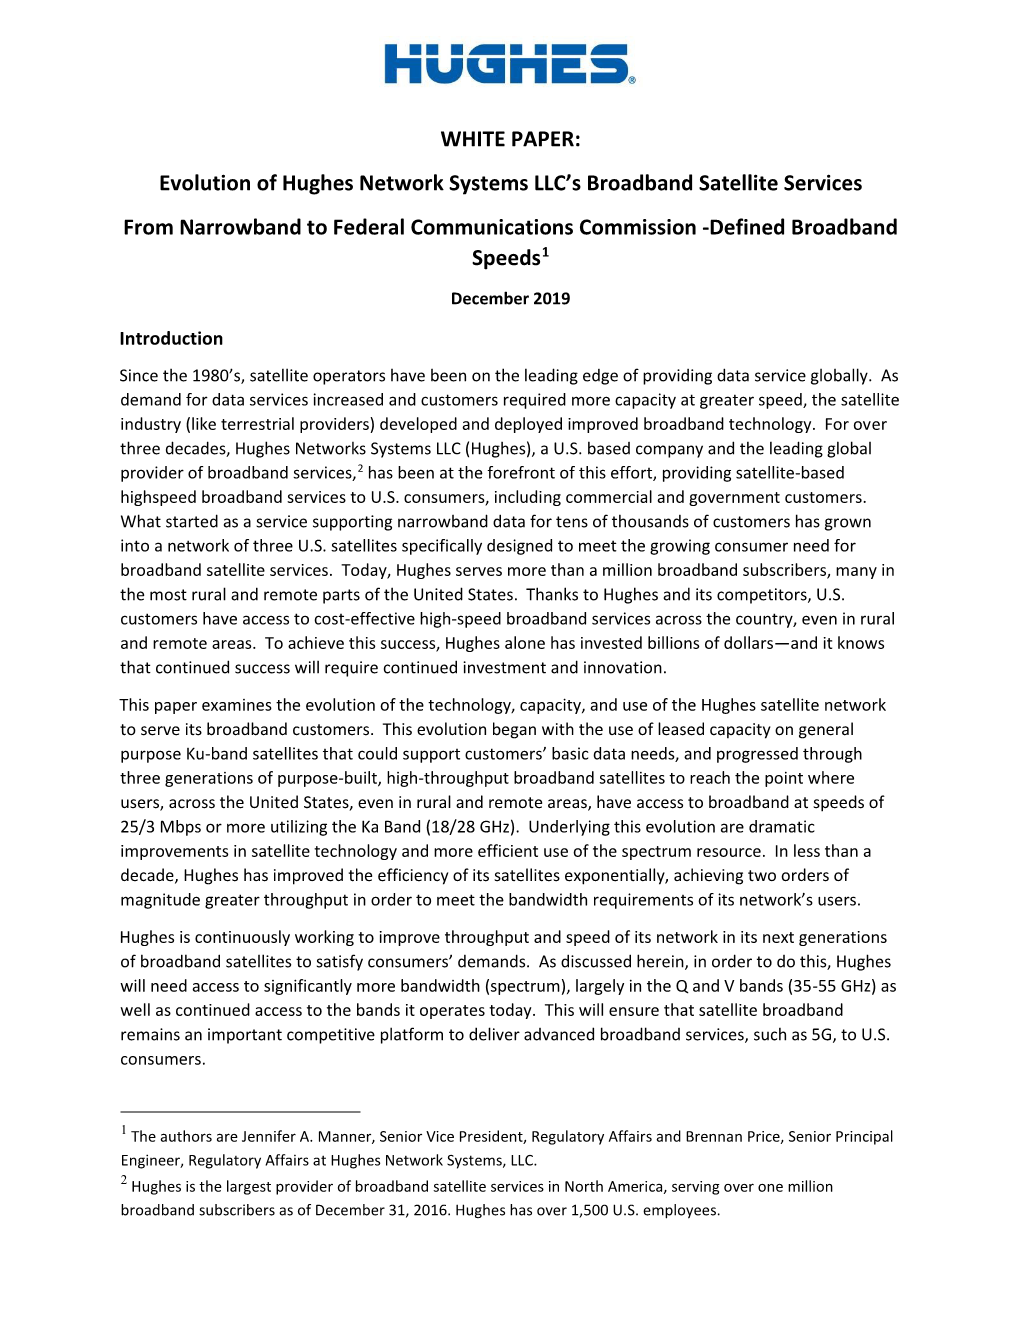 Evolution of Hughes Network Systems LLC's Broadband Satellite Services